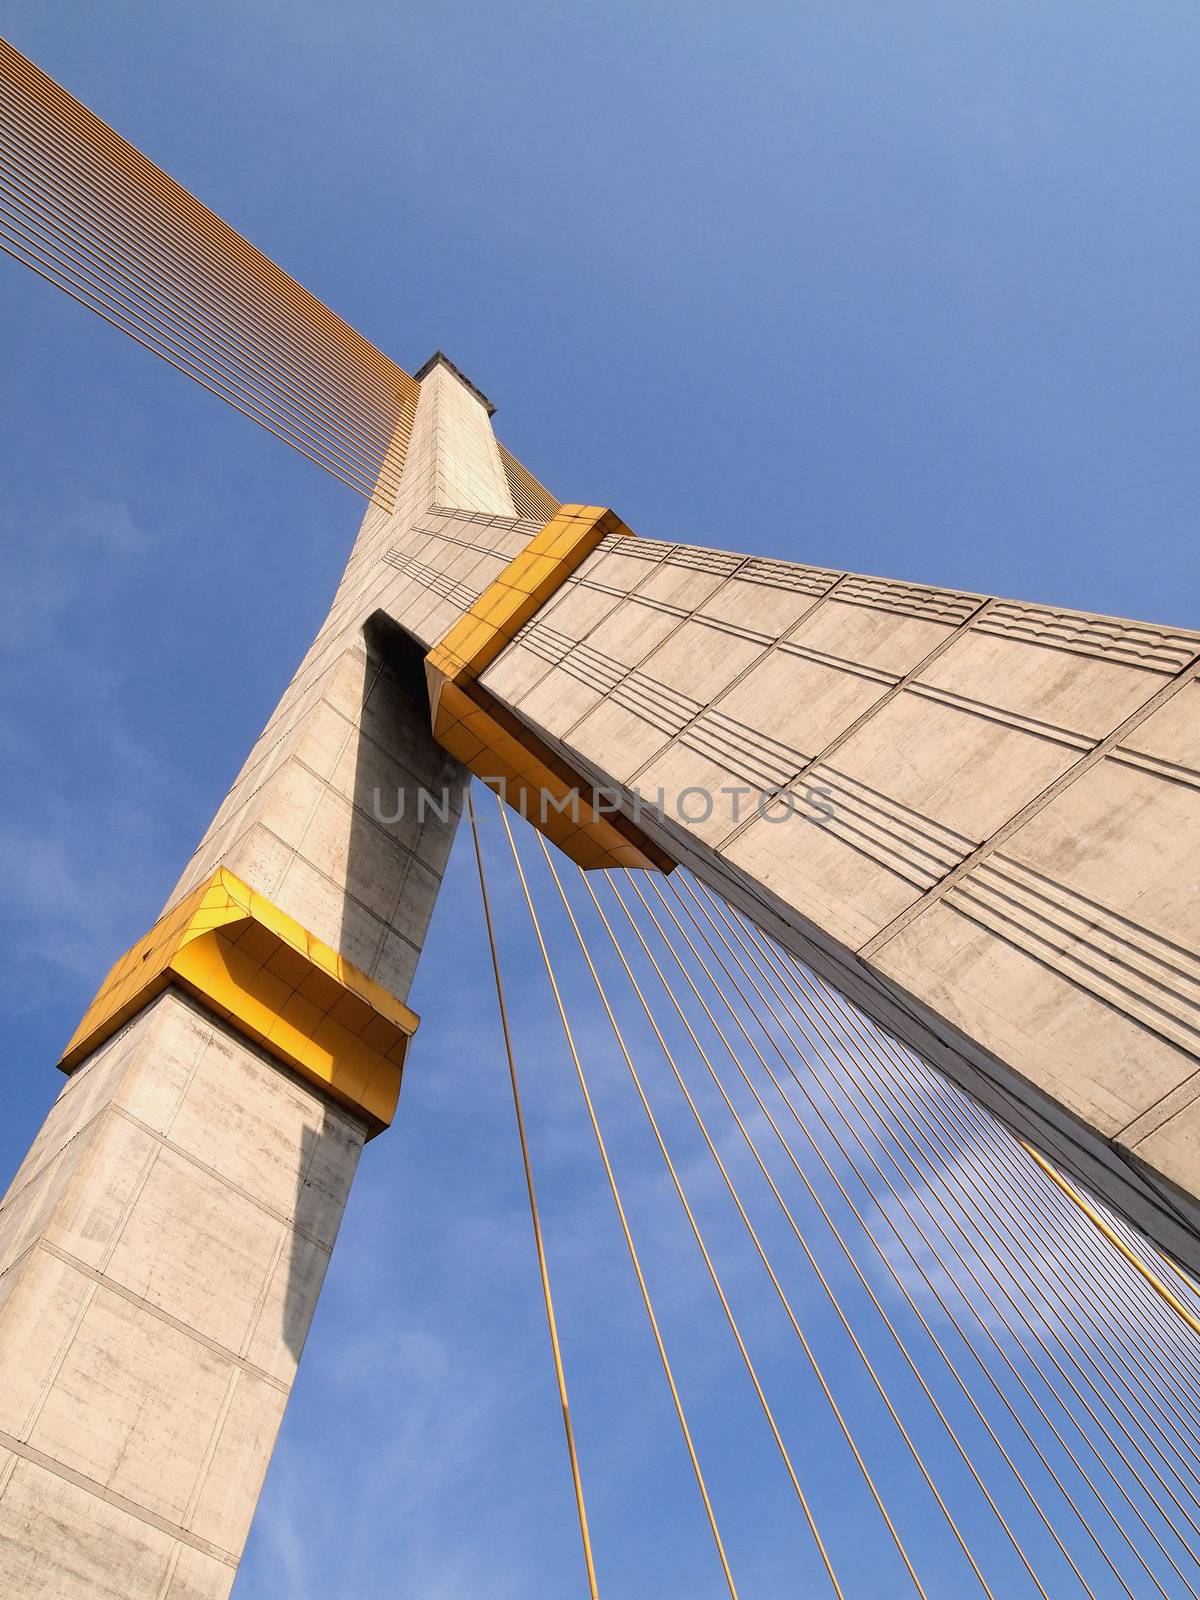 Mega sling Bridge,Rama 8, in bangkok Thailand
The bridge is shown a powerful, strong, giant     